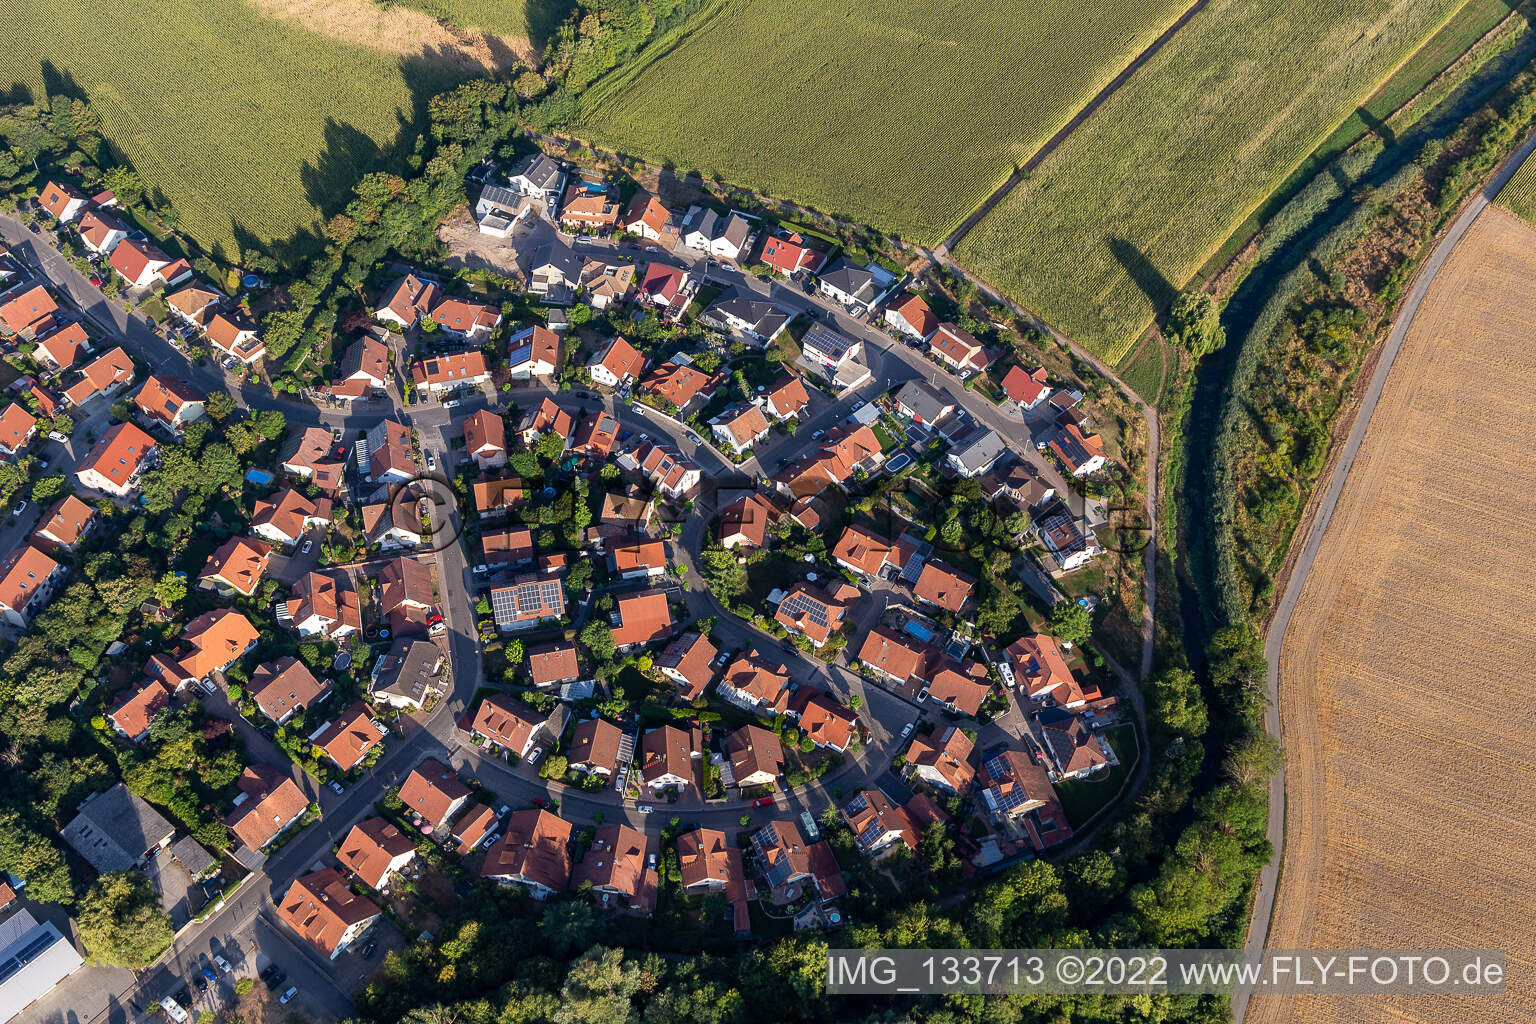 Aerial view of In Niederhorst in Leimersheim in the state Rhineland-Palatinate, Germany